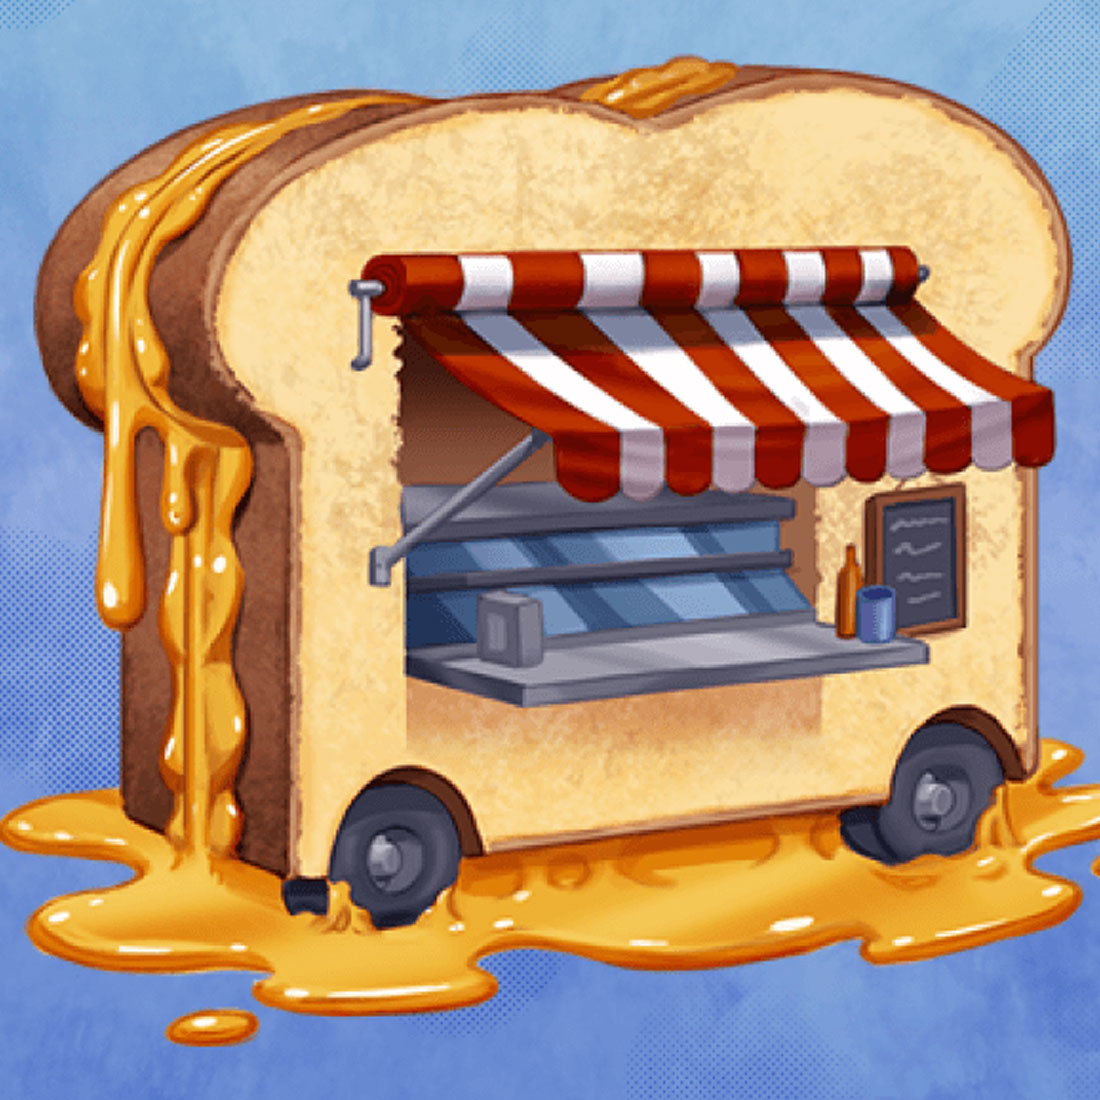 An illustration of a food truck tha resembles a sandwich